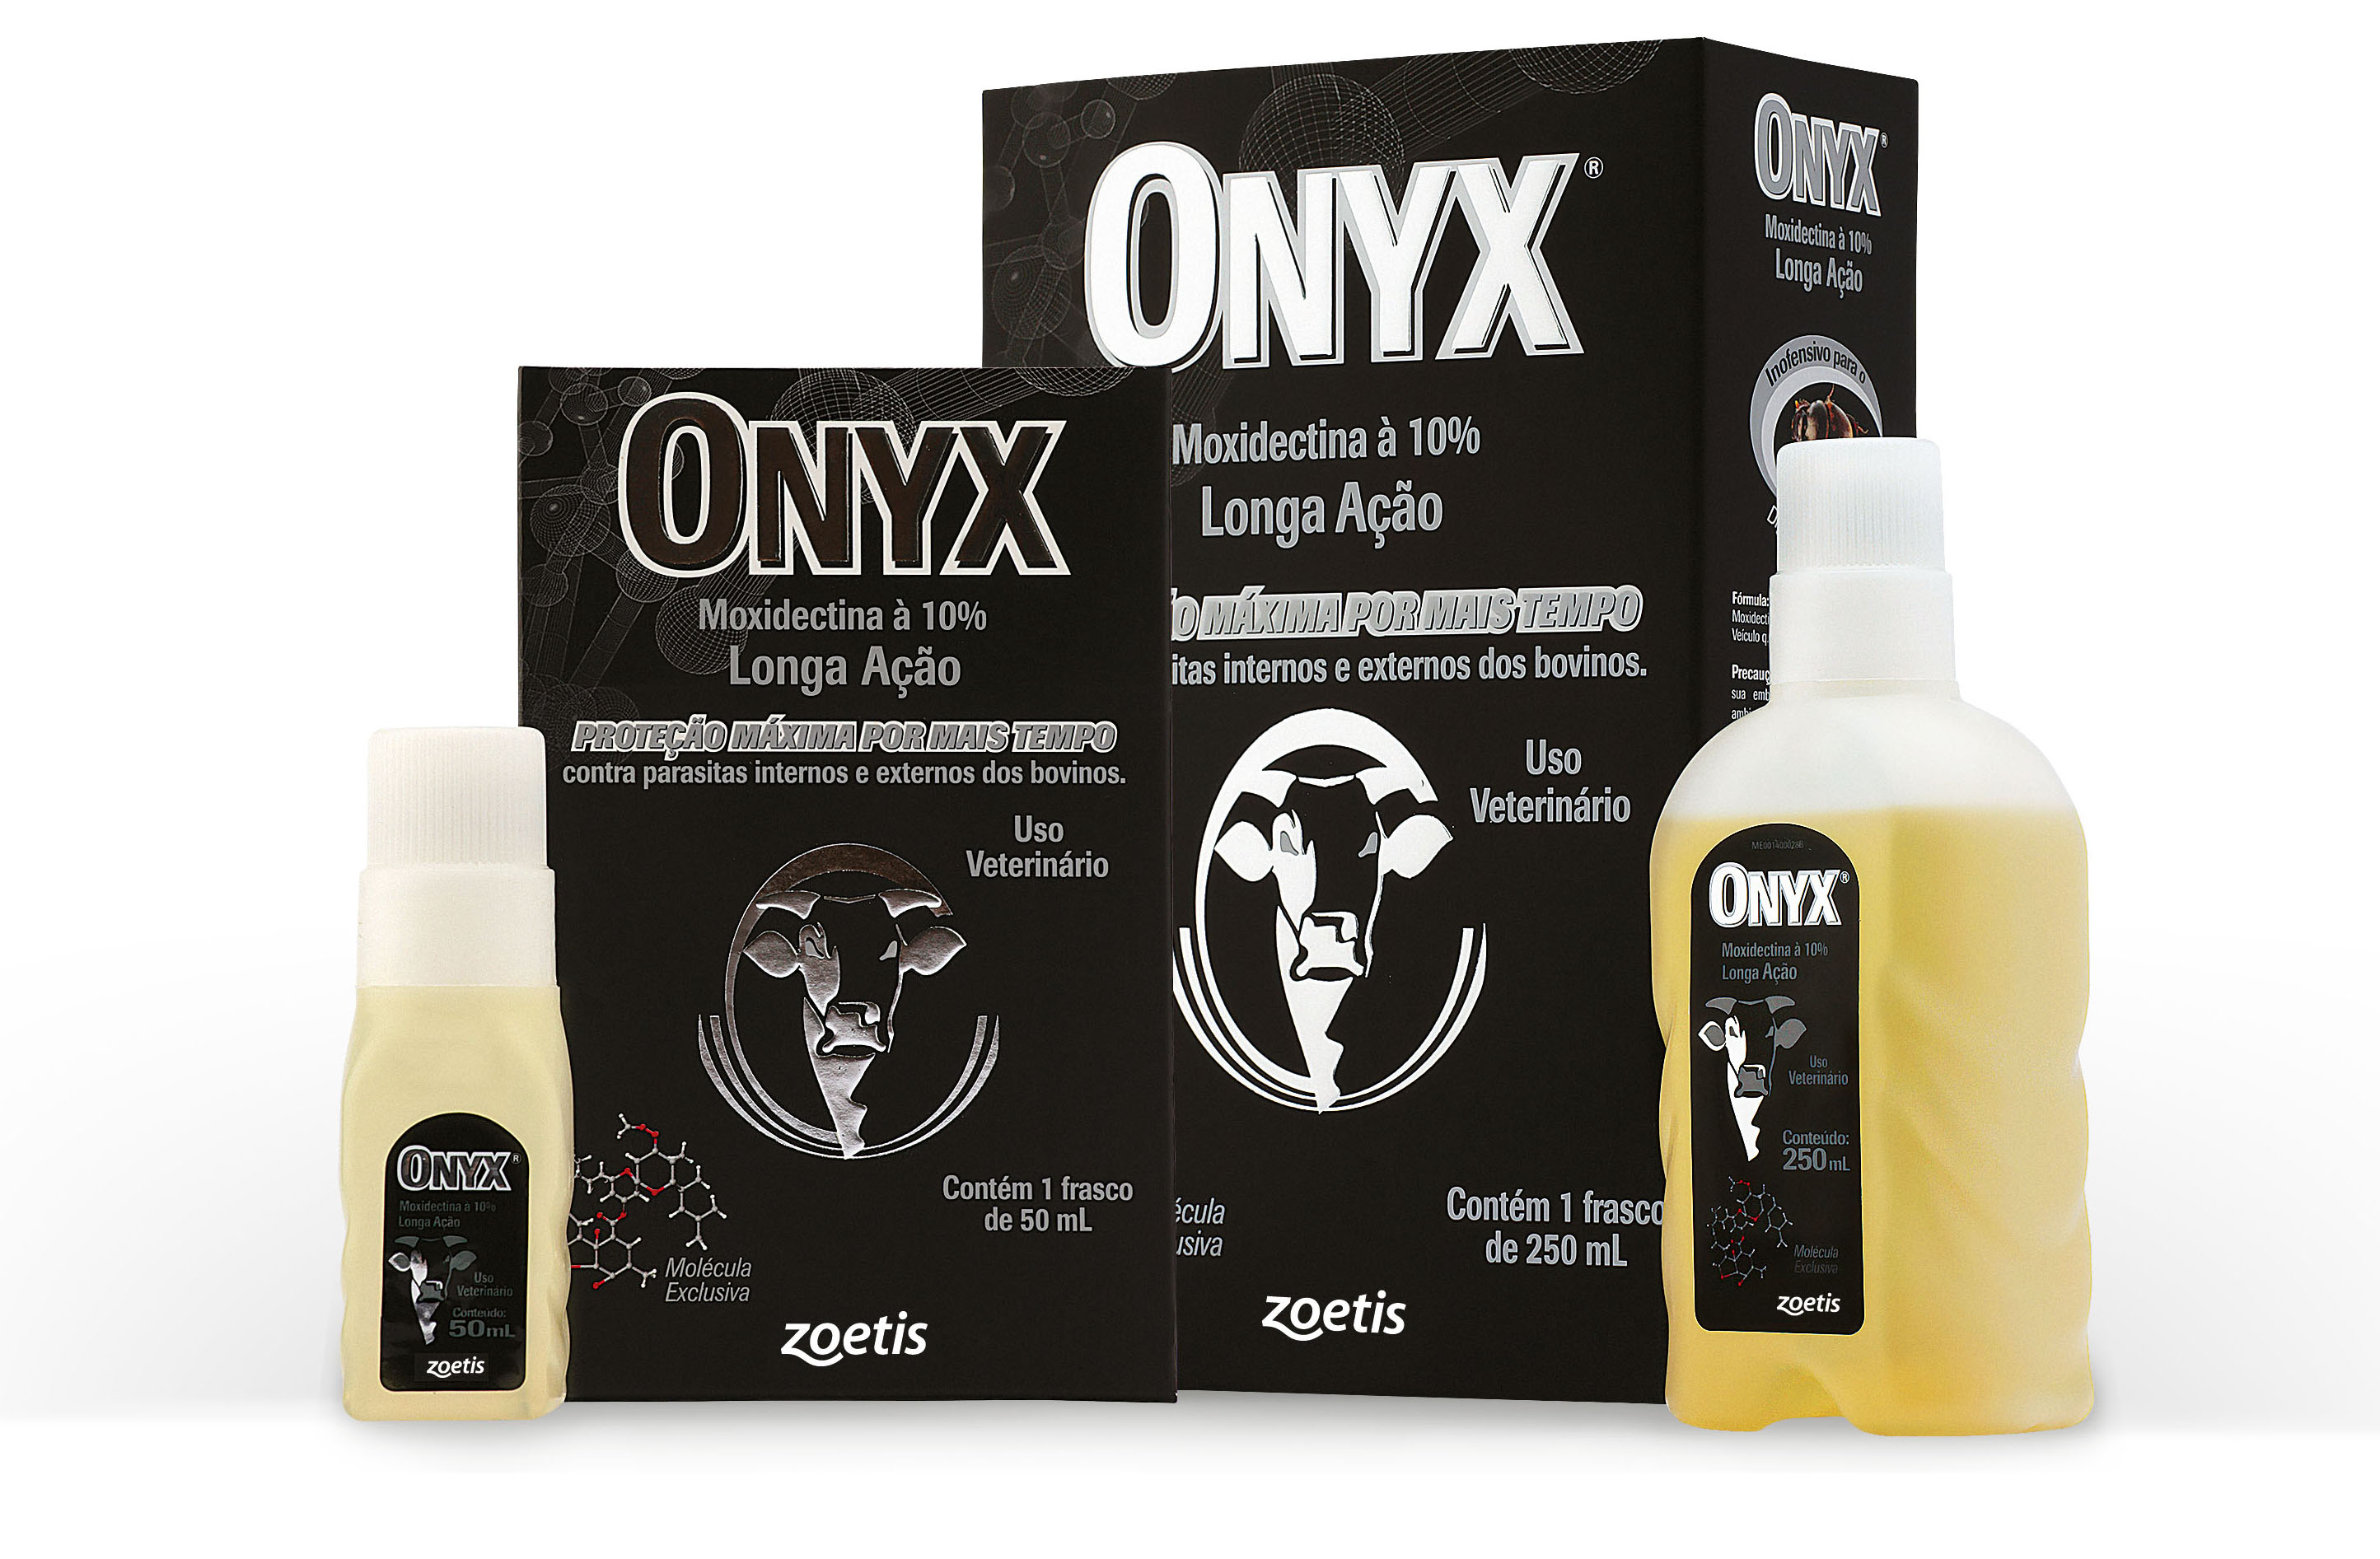 Onyx Product